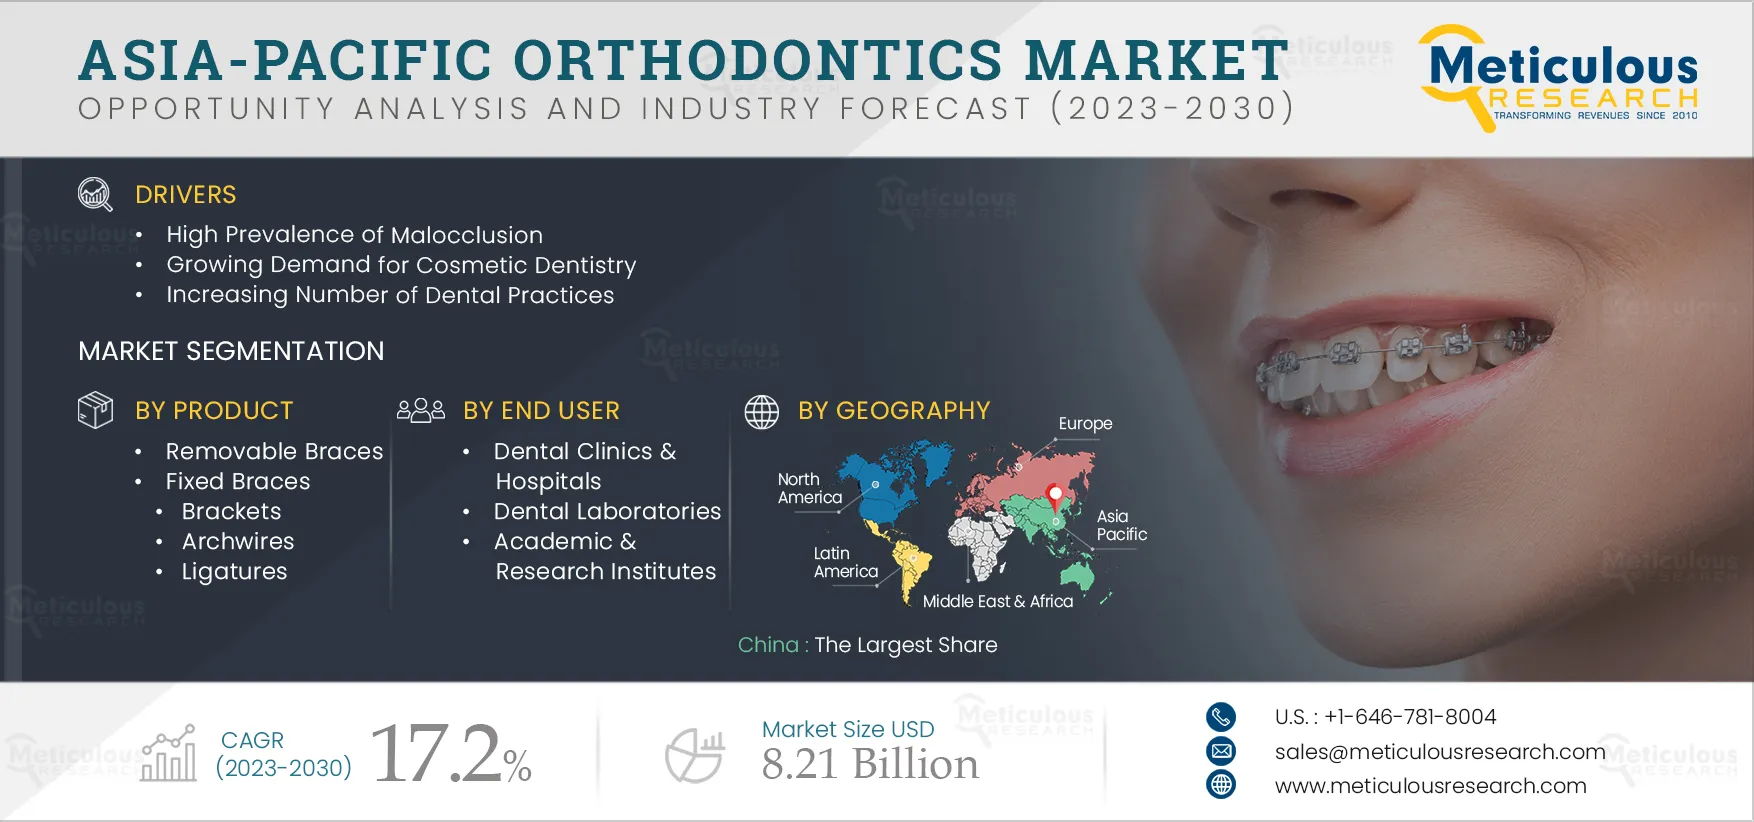 Asia-Pacific Orthodontics Market